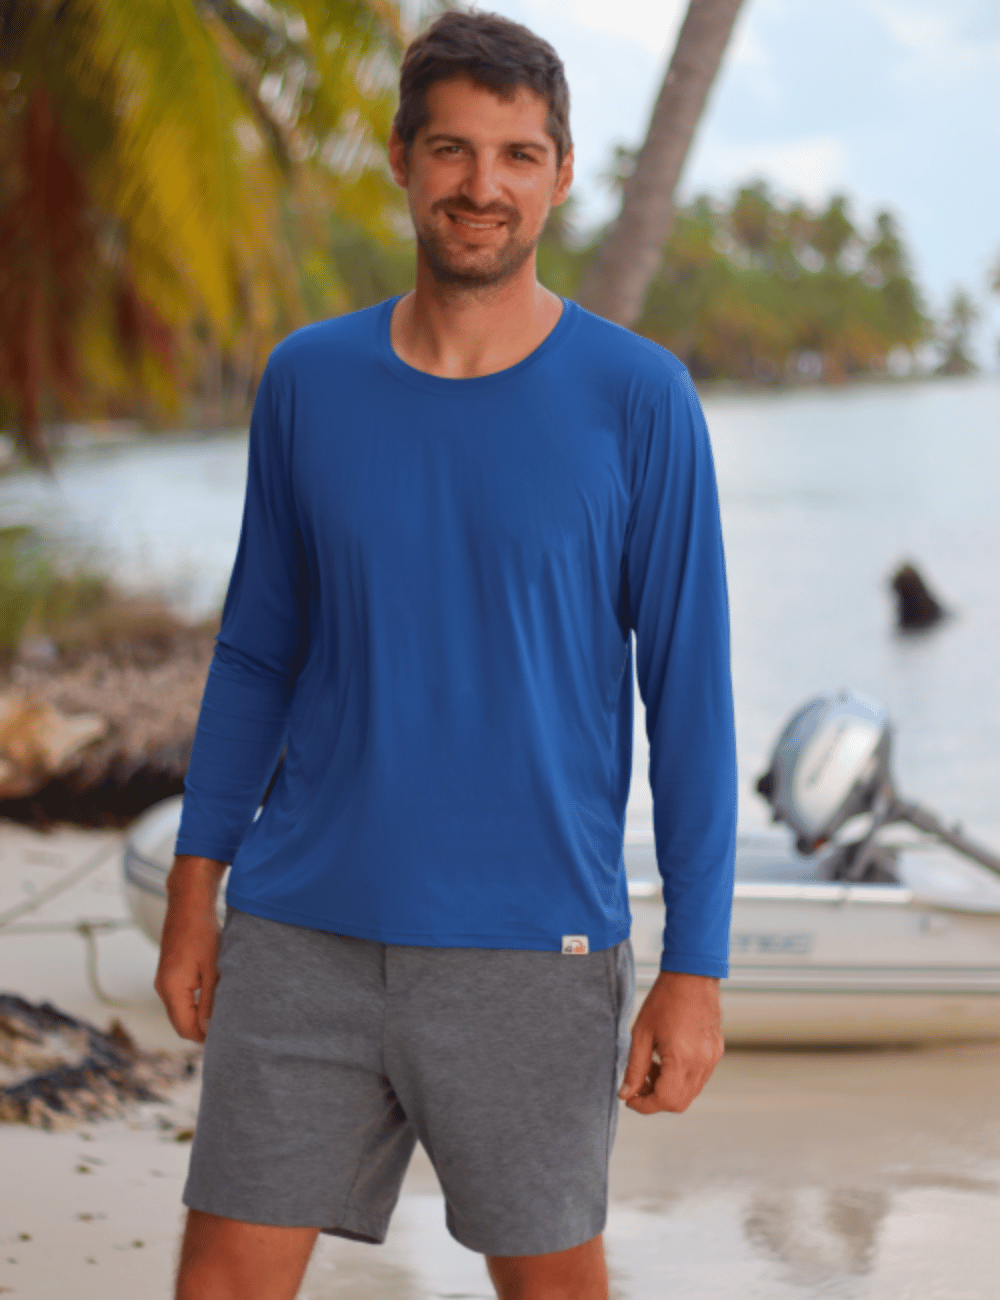 Andre auf dem Strand mit FREE langarm shirt blau